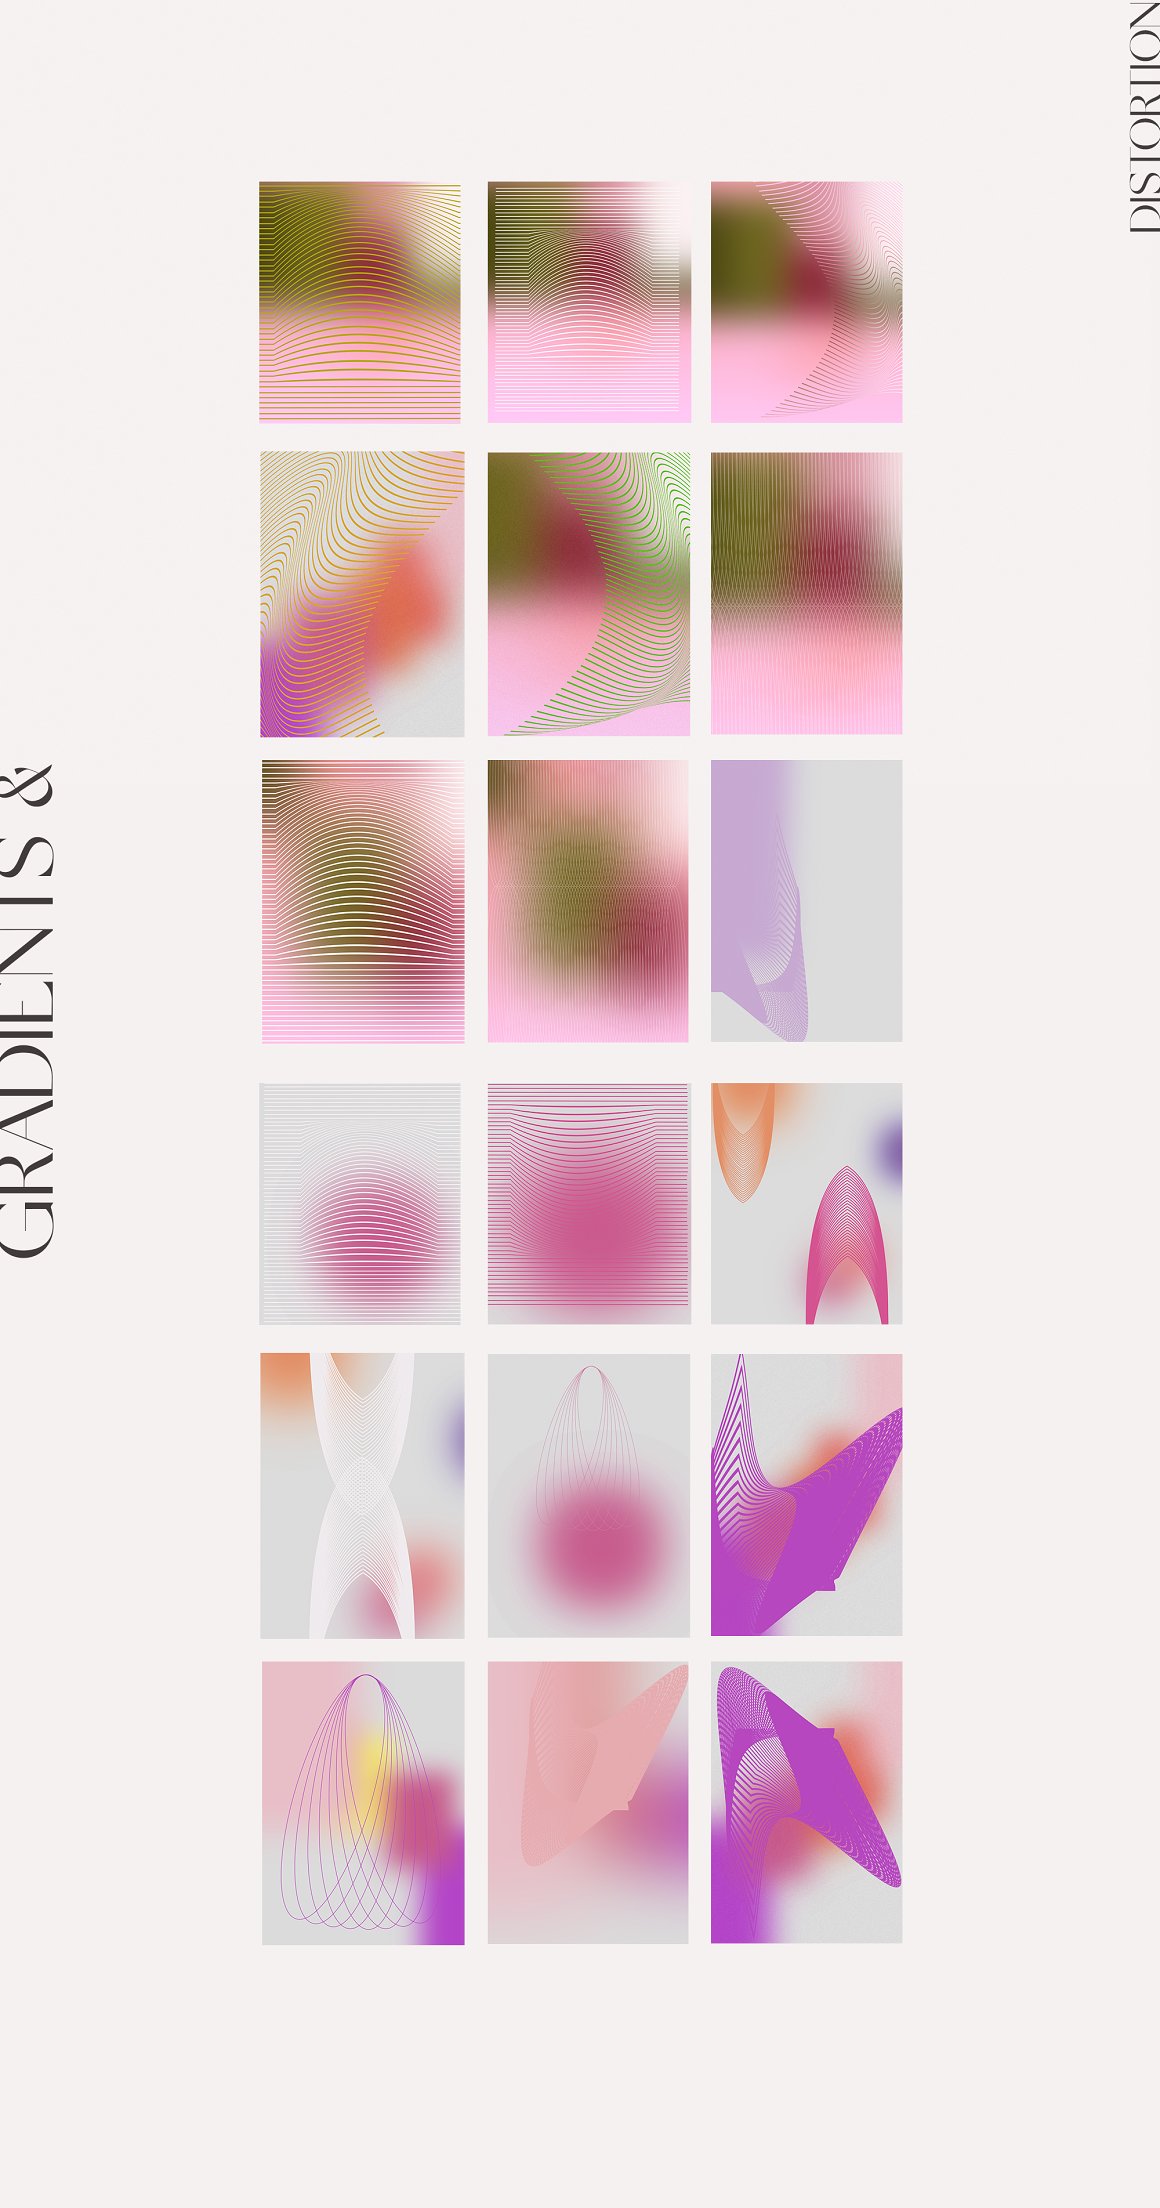 LARAS 抽象几何扭曲彩色渐变纹理拼贴元素海报设计背景PNG素材 Gradient Texture Collage Bundle 图片素材 第5张